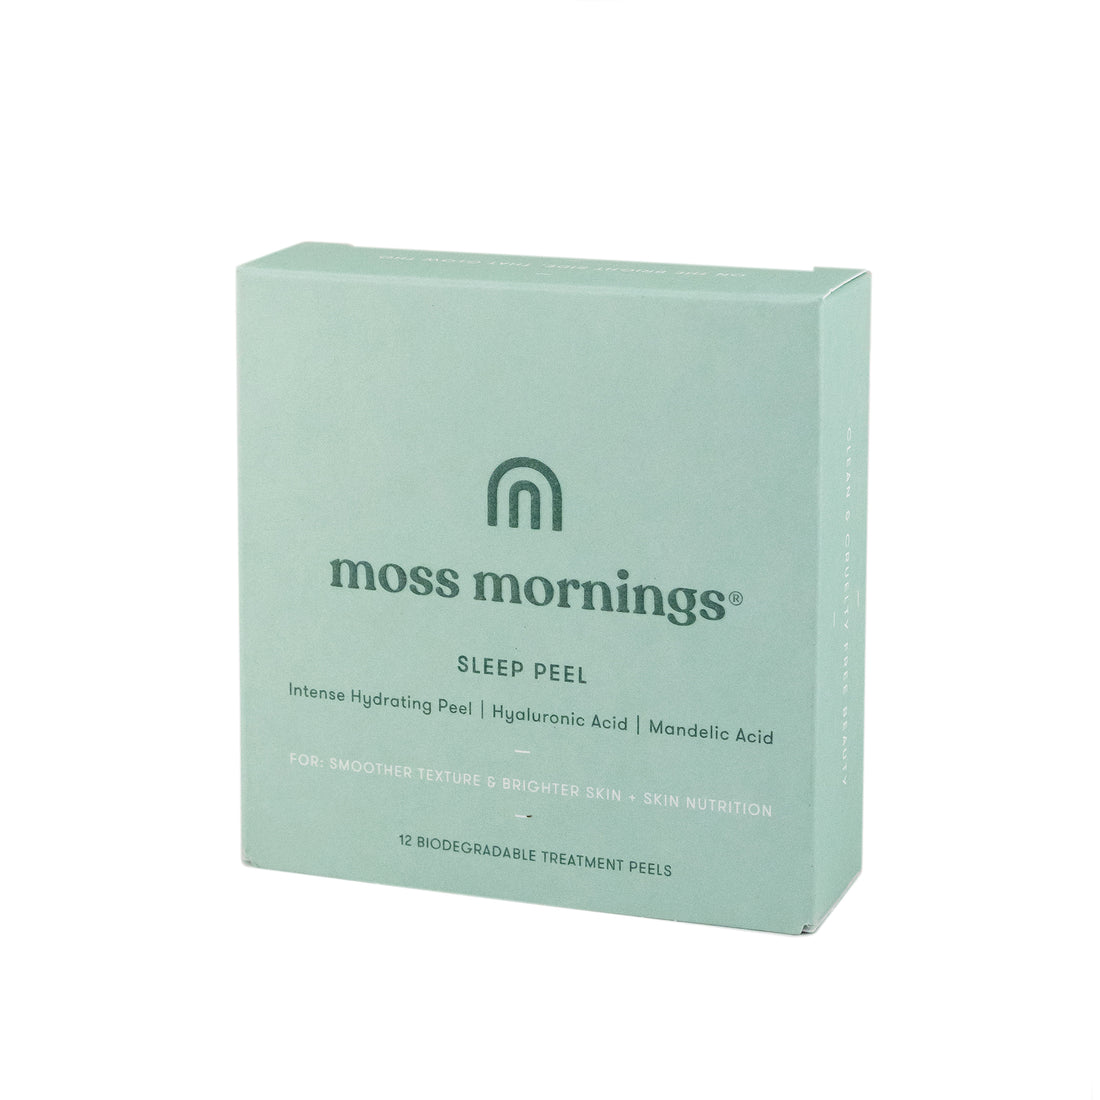 Sleep Peel - Moss Mornings